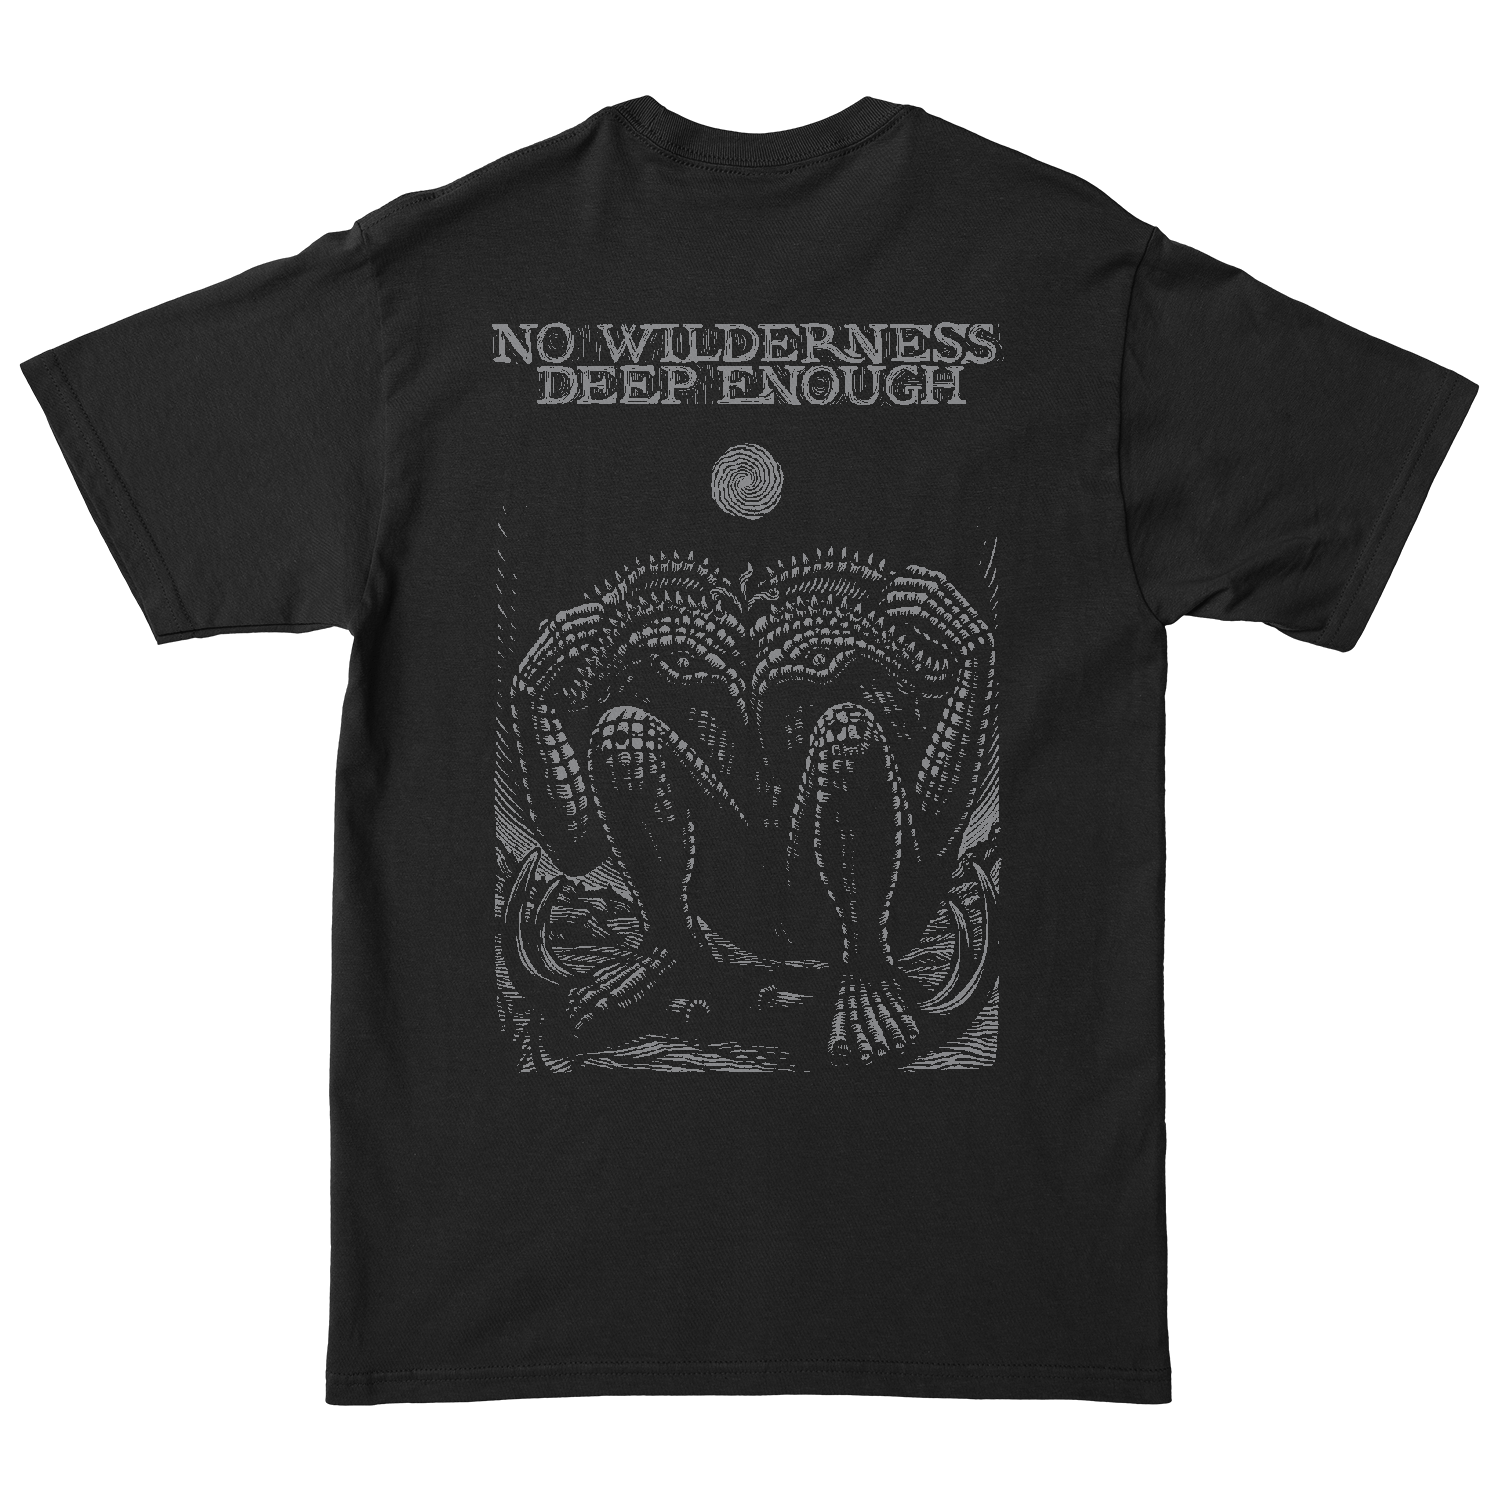 STEVE VON TILL "No Wilderness" Black T-Shirt